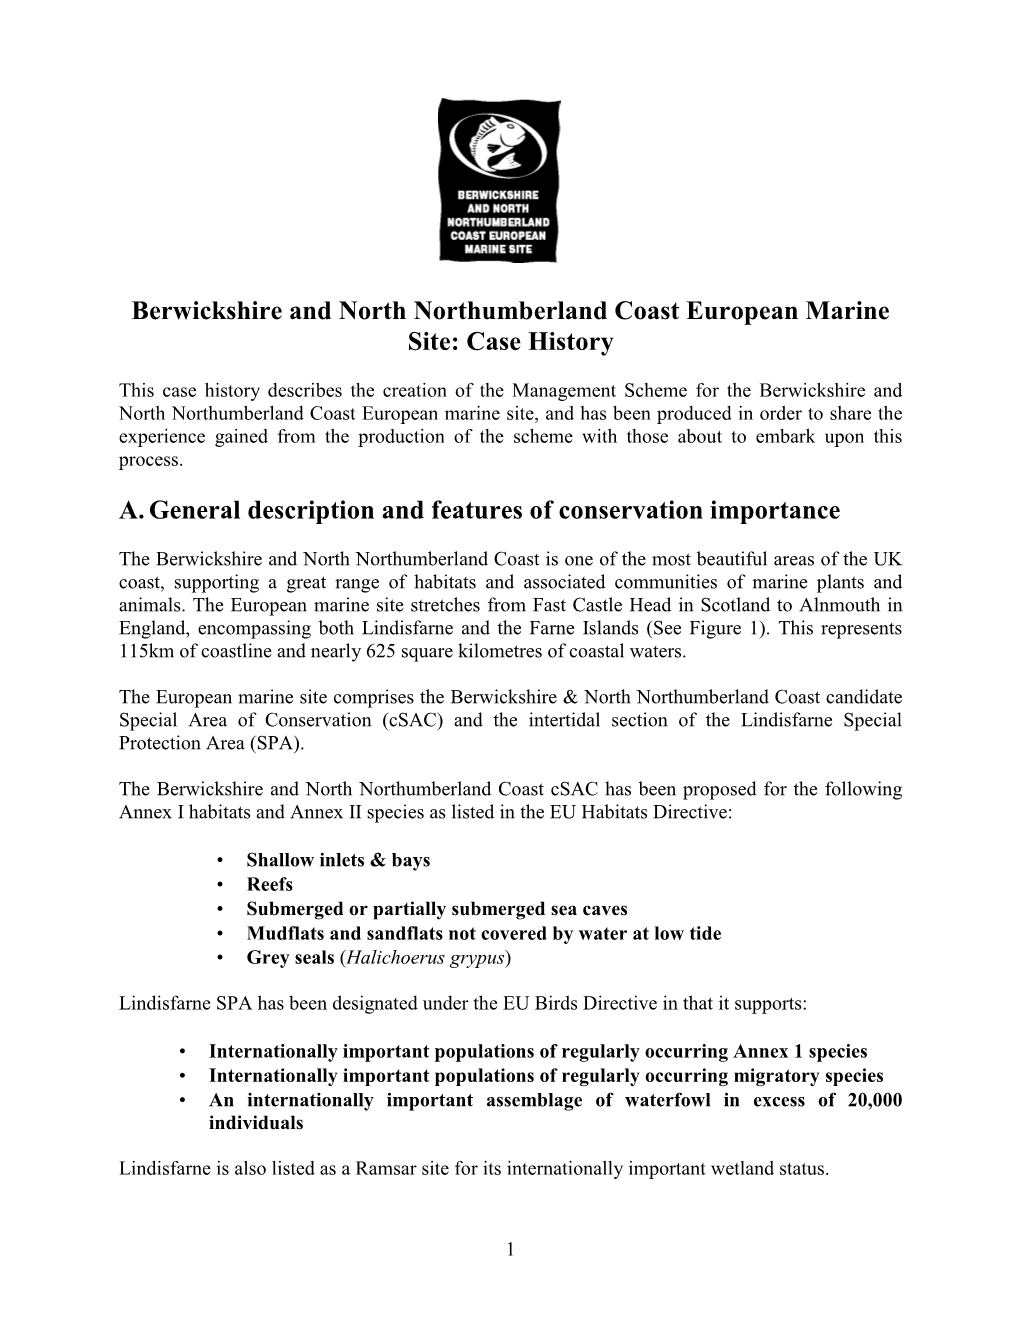 Berwickshire and North Northumberland Coast: Case History